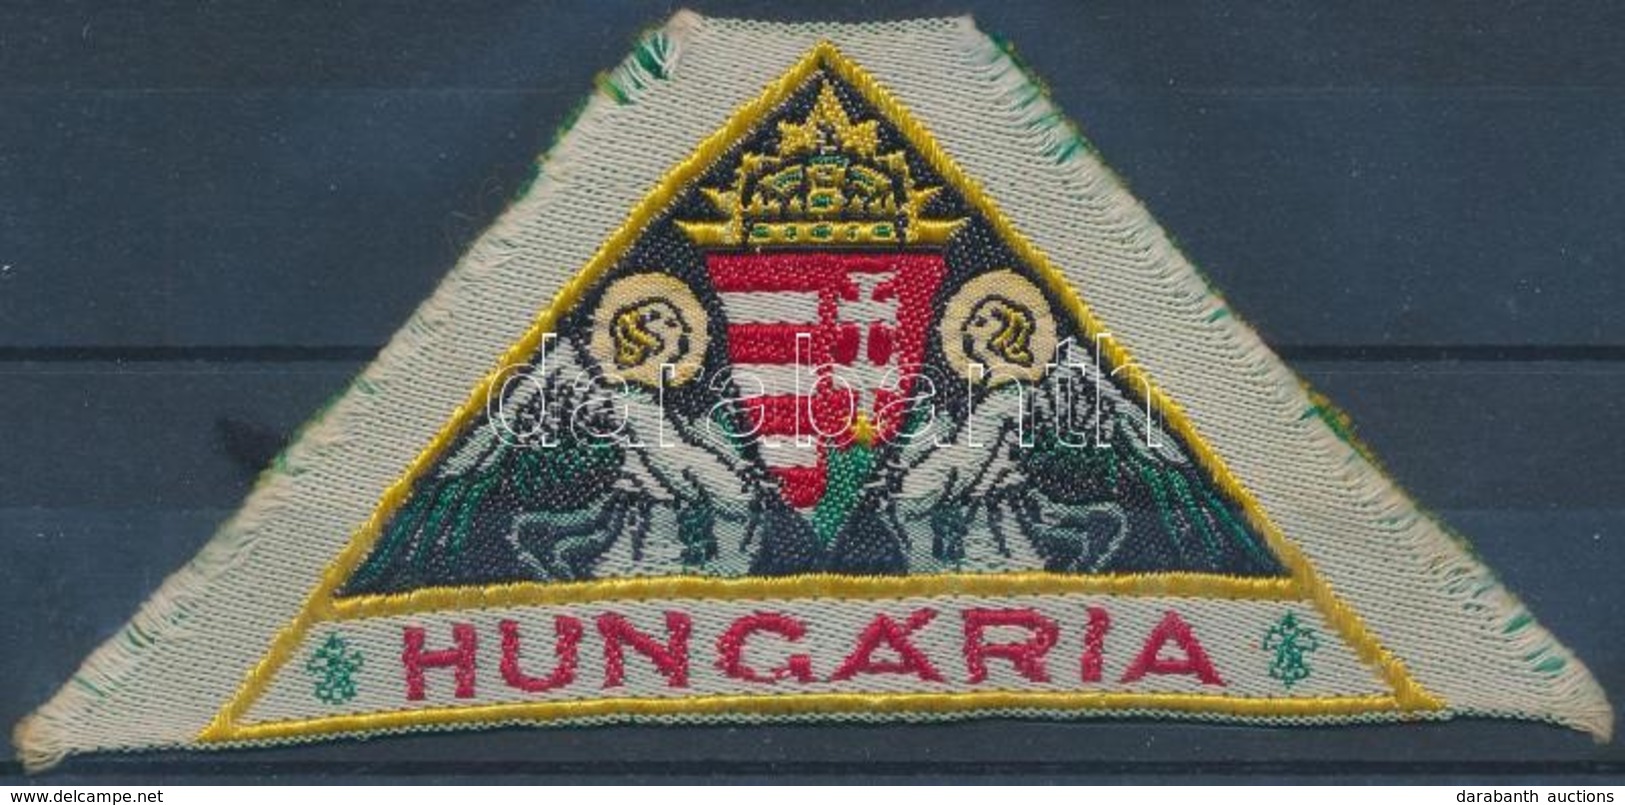 'Hungária' Textilfelvarró - Scoutisme